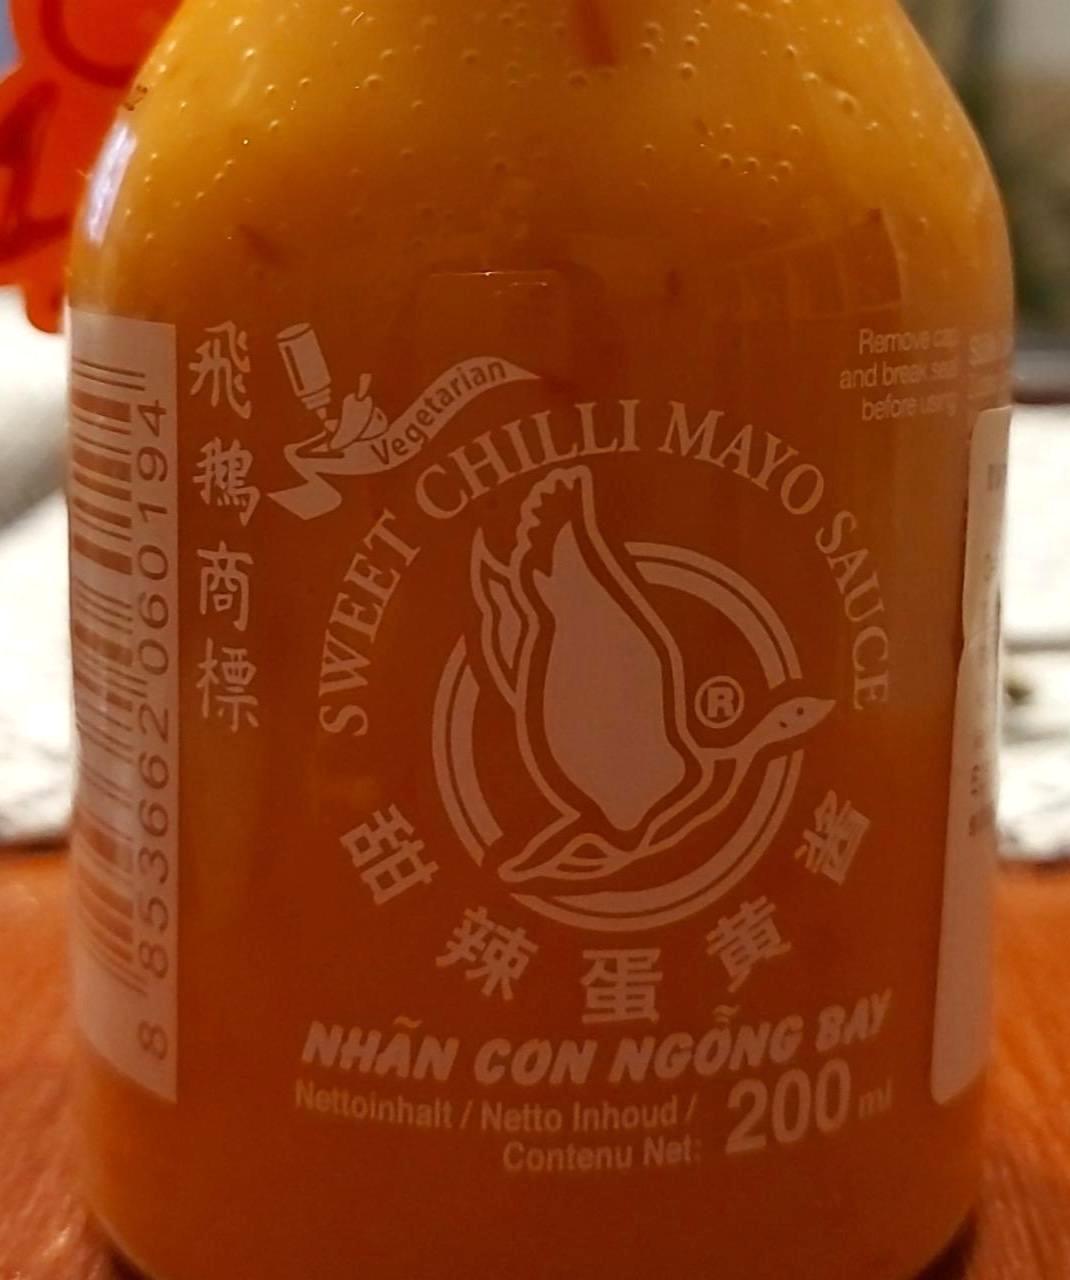 Képek - Sweet chilli mayo sauce Nhan con ngong bay